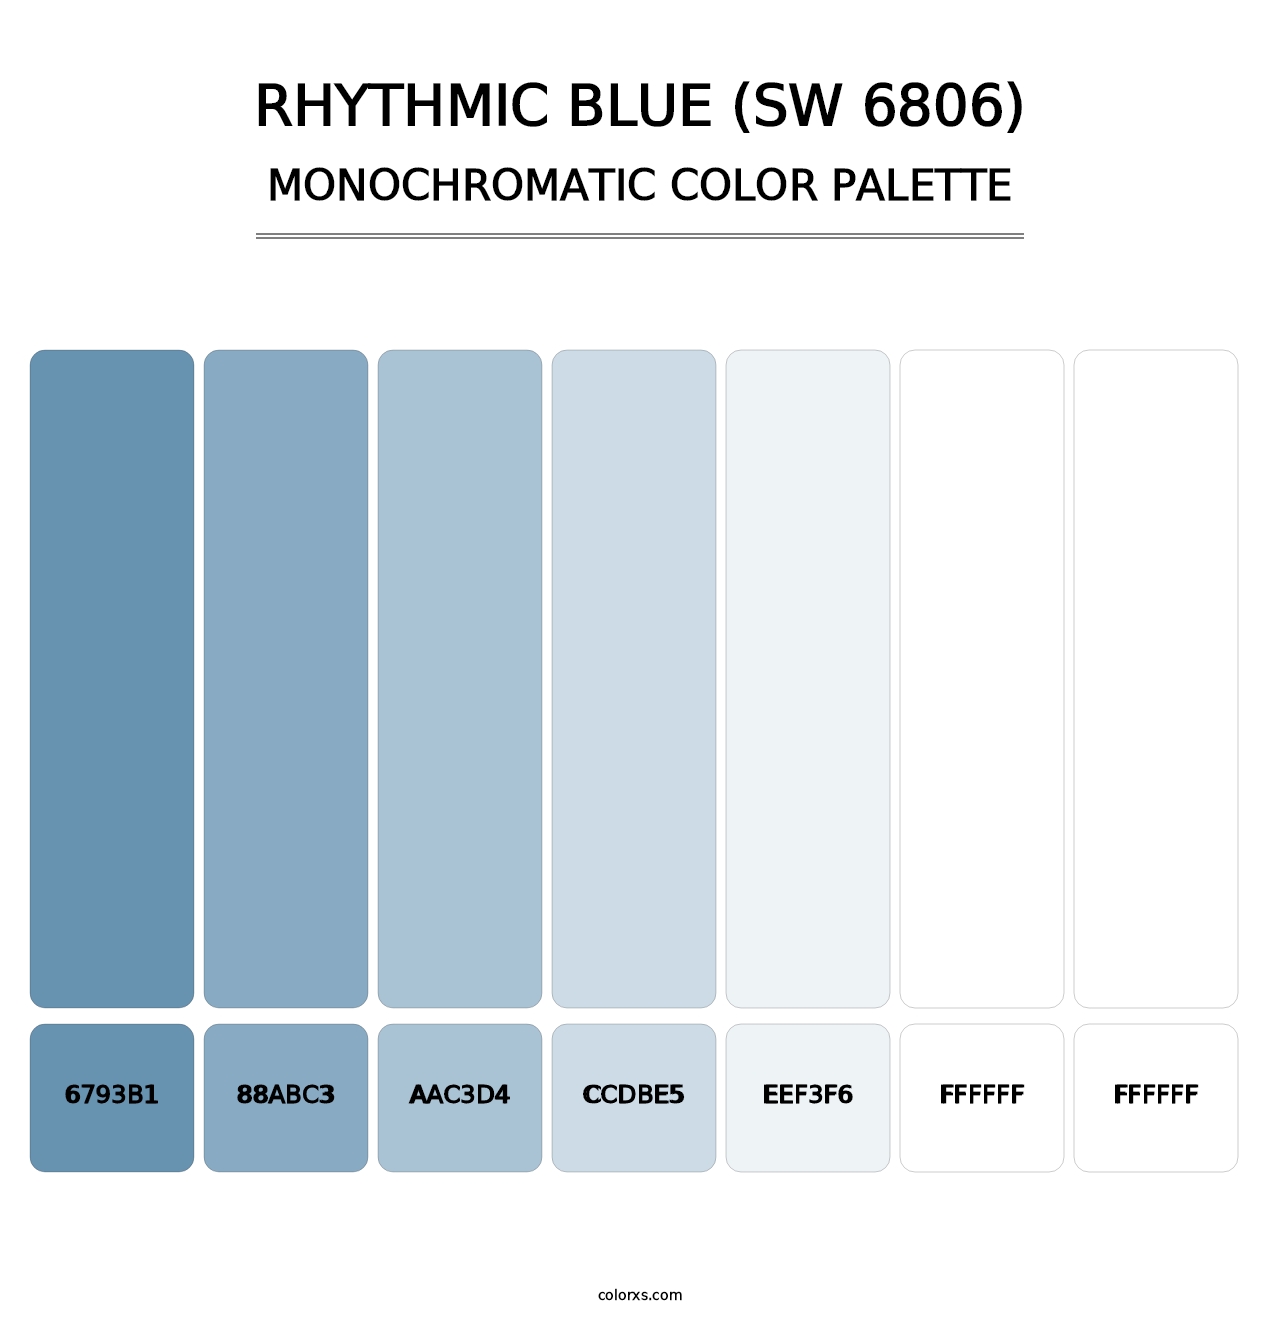 Rhythmic Blue (SW 6806) - Monochromatic Color Palette